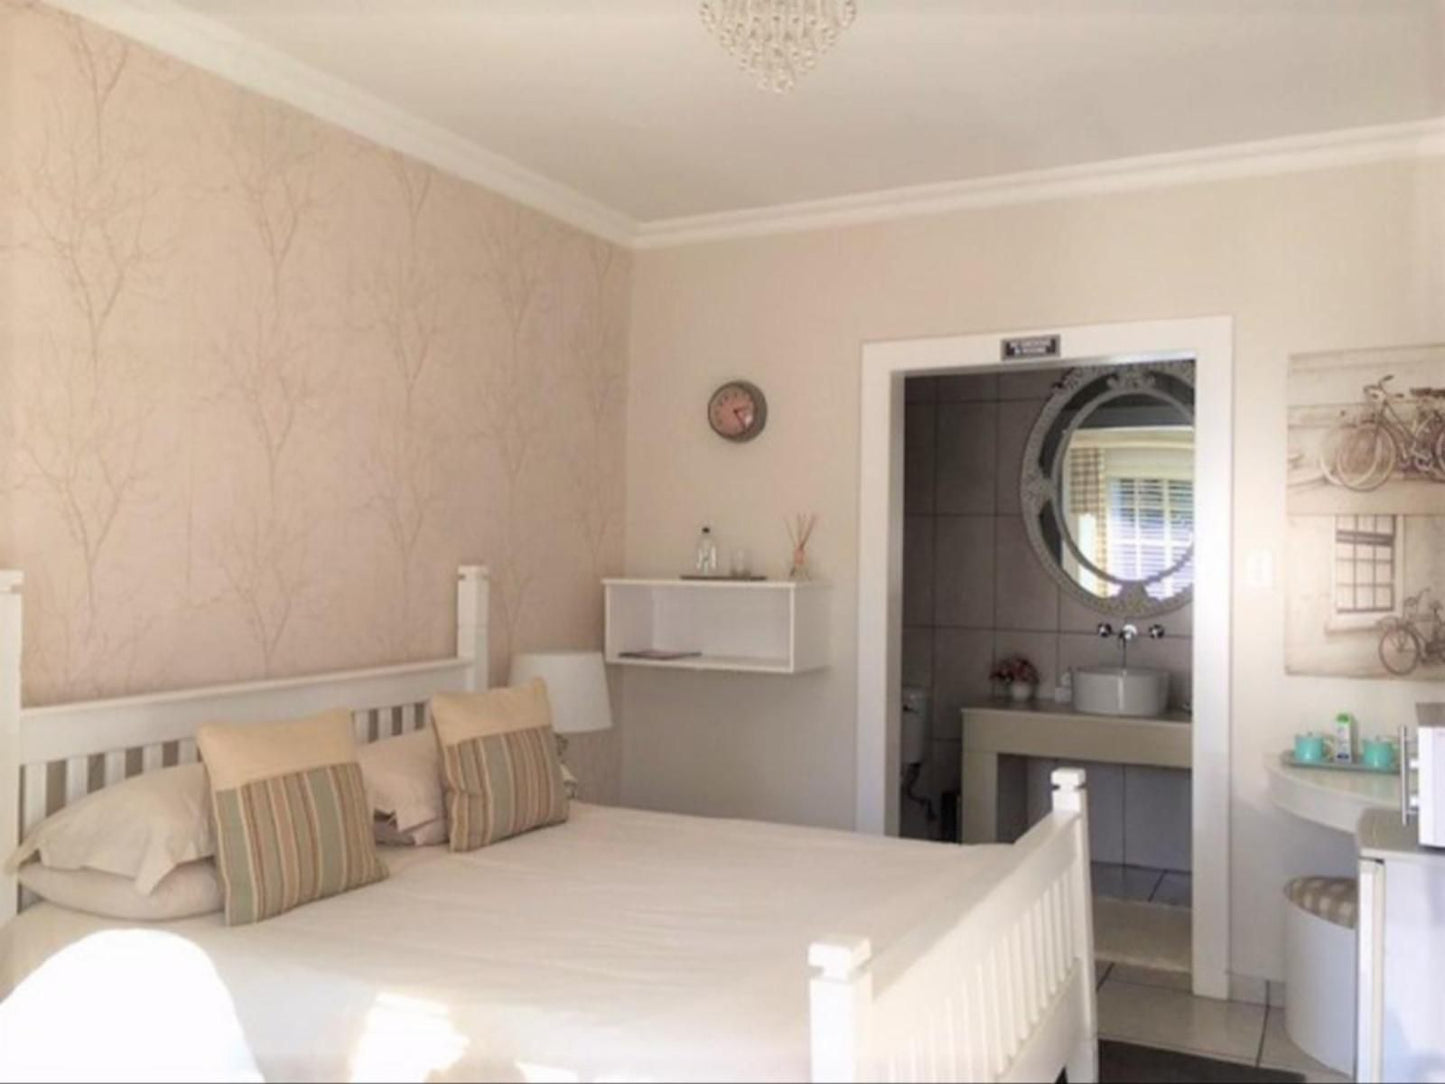 Danielle S Guest House Queenswood Pretoria Tshwane Gauteng South Africa Bedroom